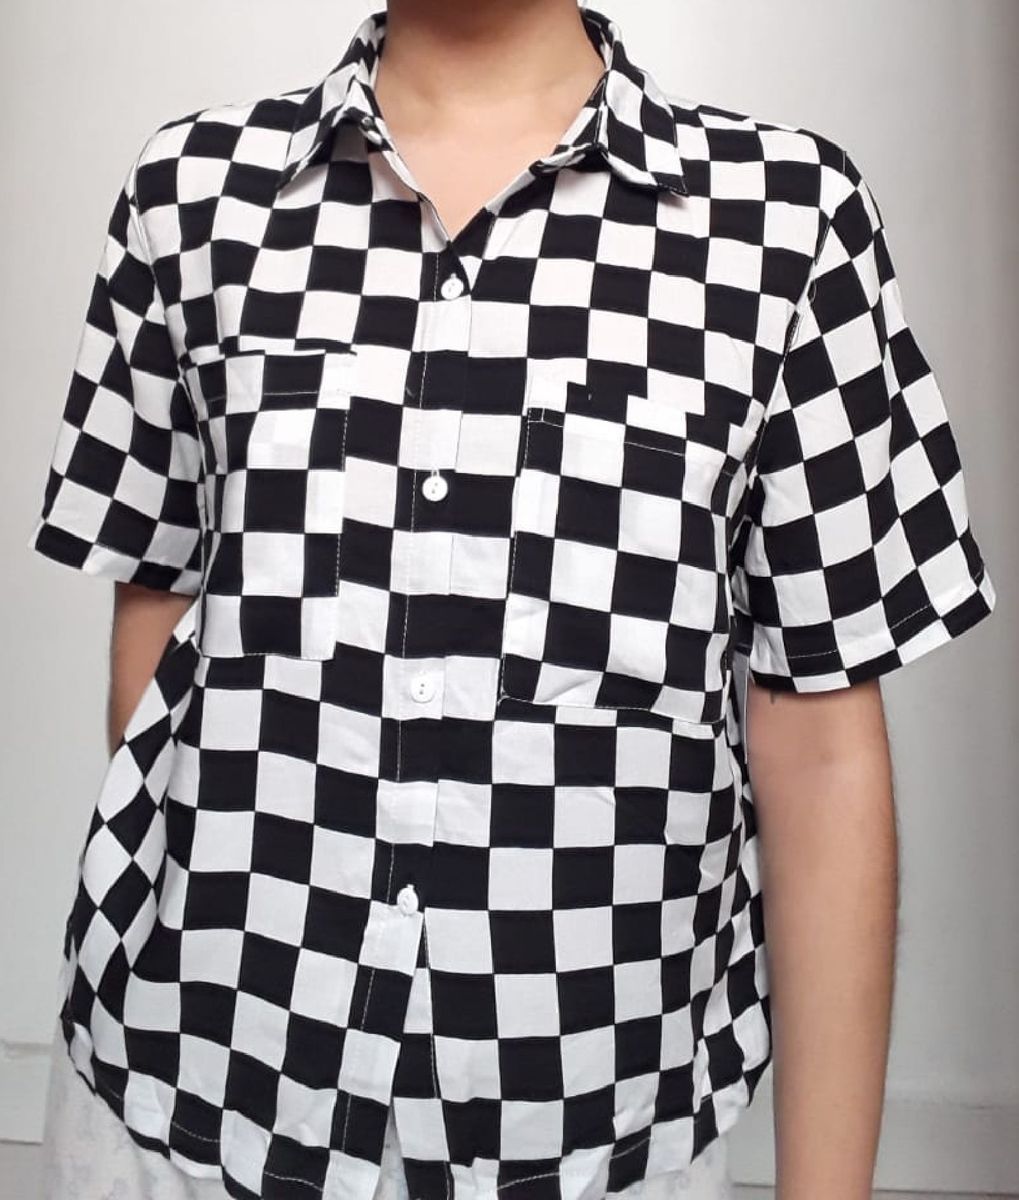 renner camisa xadrez